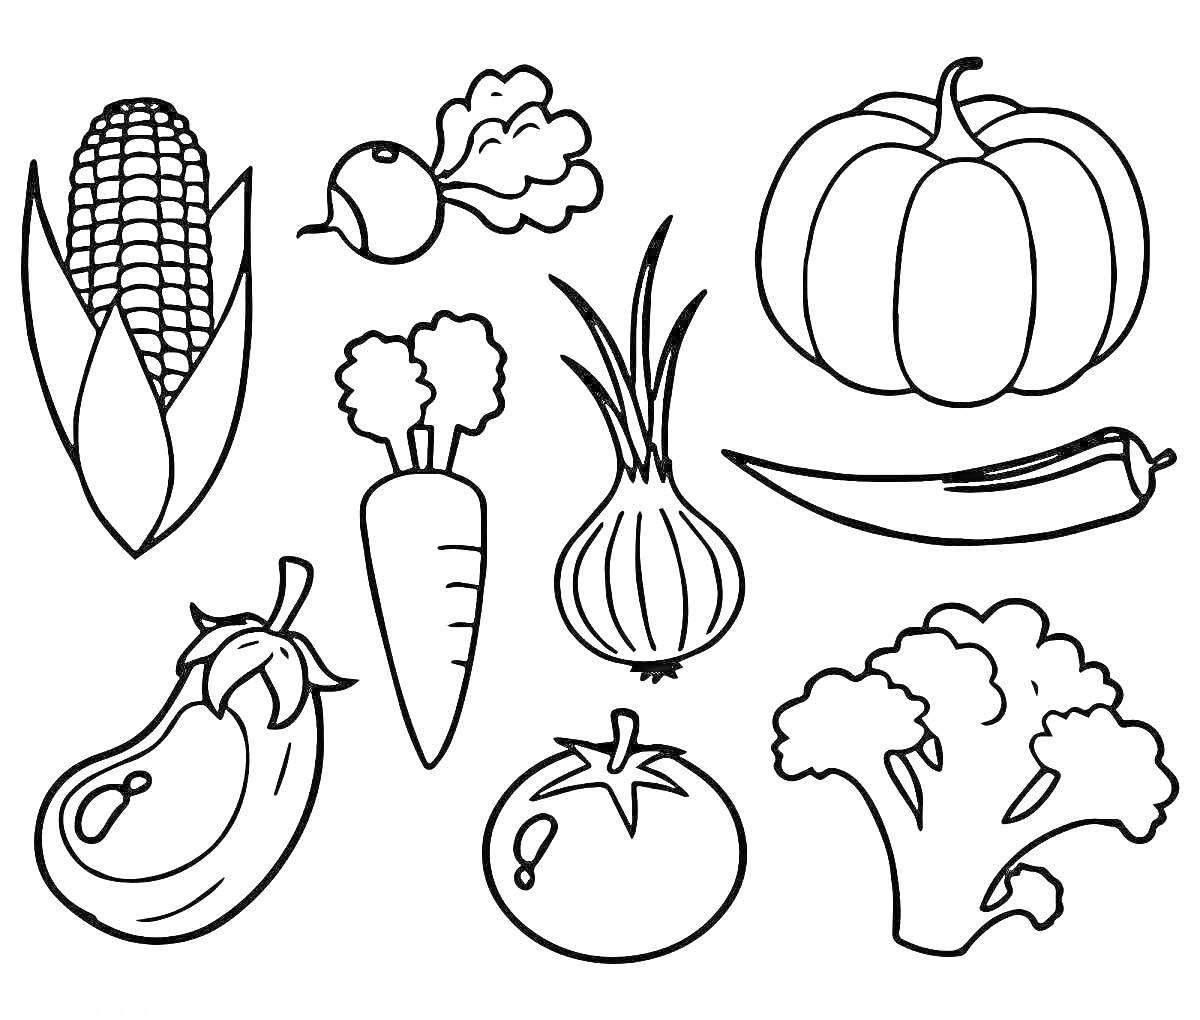 Кукуруза, редис, цветная капуста, тыква, баклажан, морковь, лук, помидор, брокколи, перец